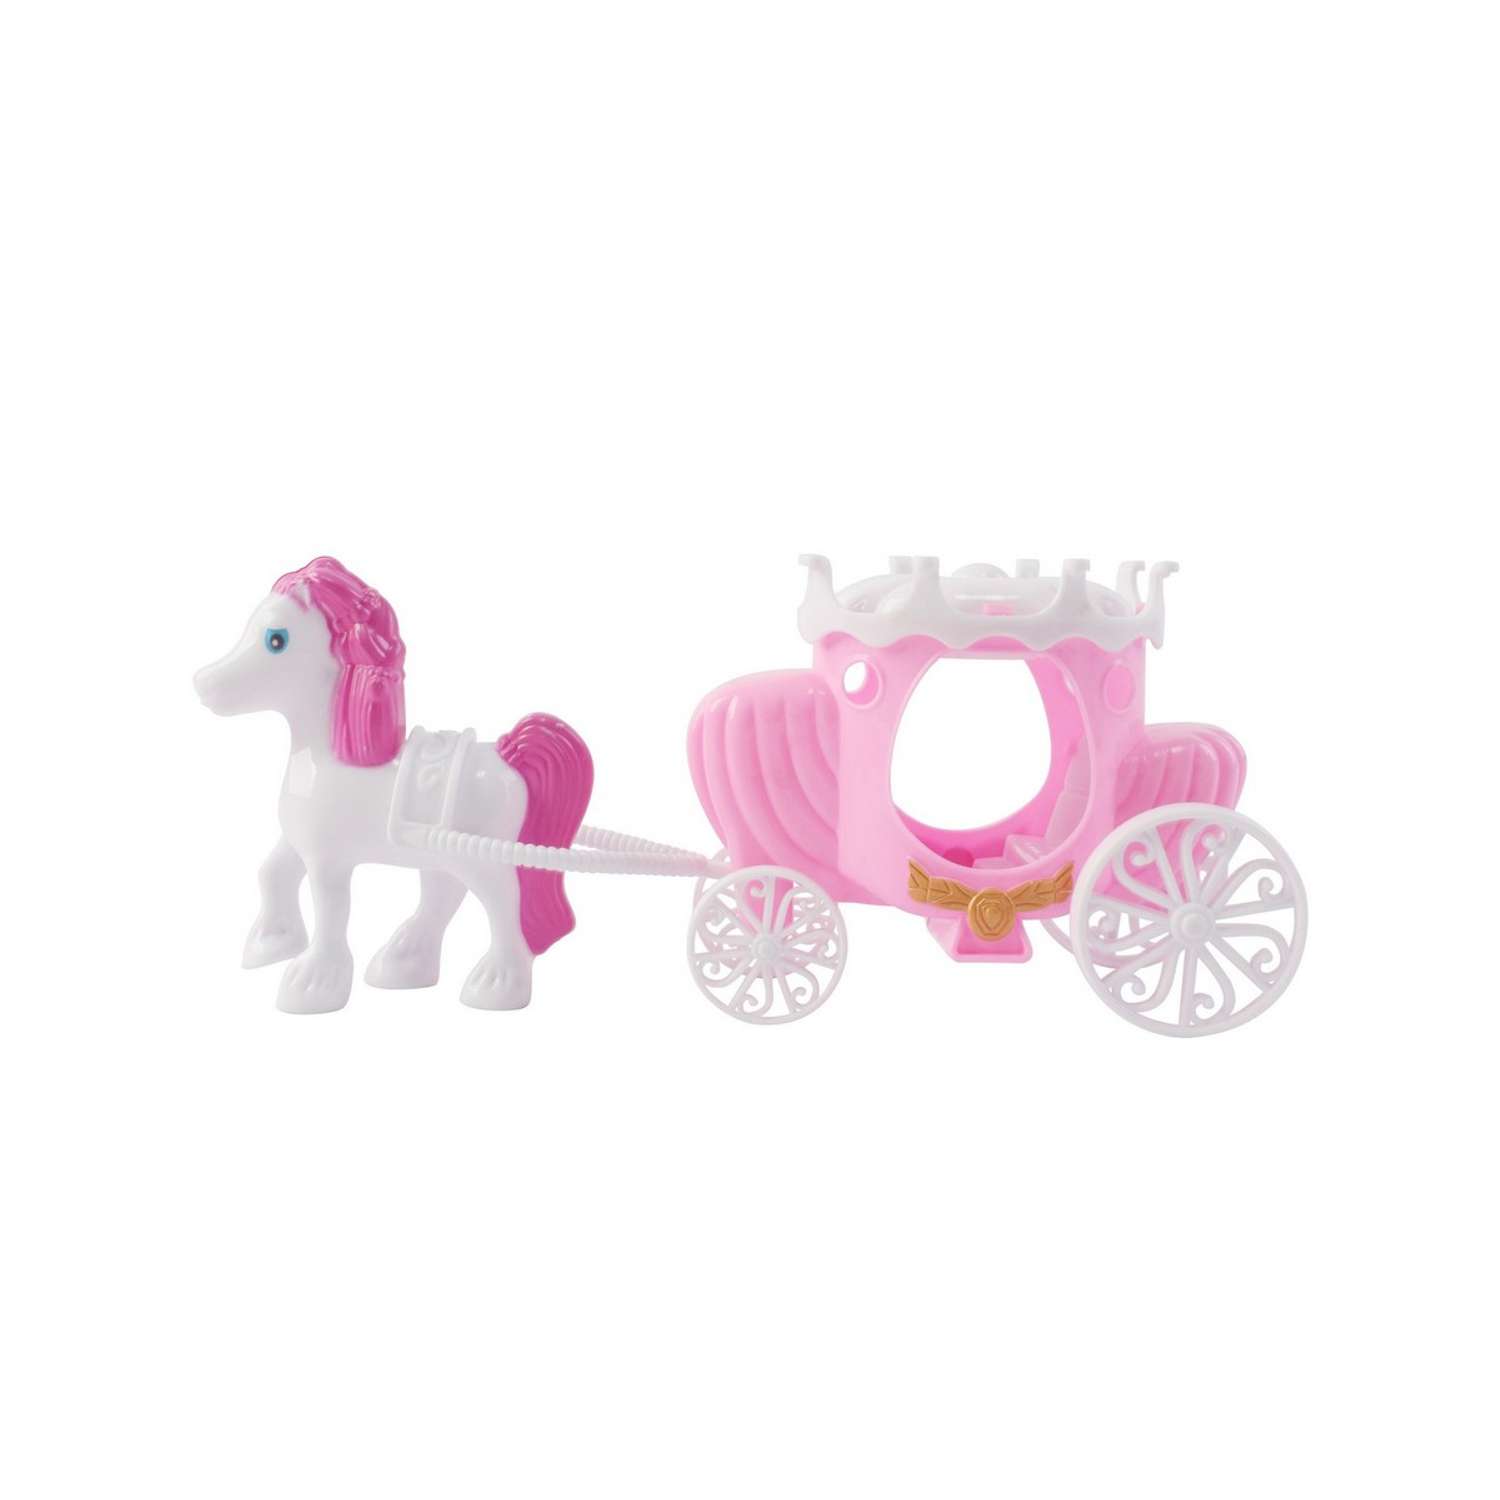 Замок принцессы DollyToy 33х5х26 см кукла 9 см карета лошадь мебель розовый DOL0803-102 - фото 2